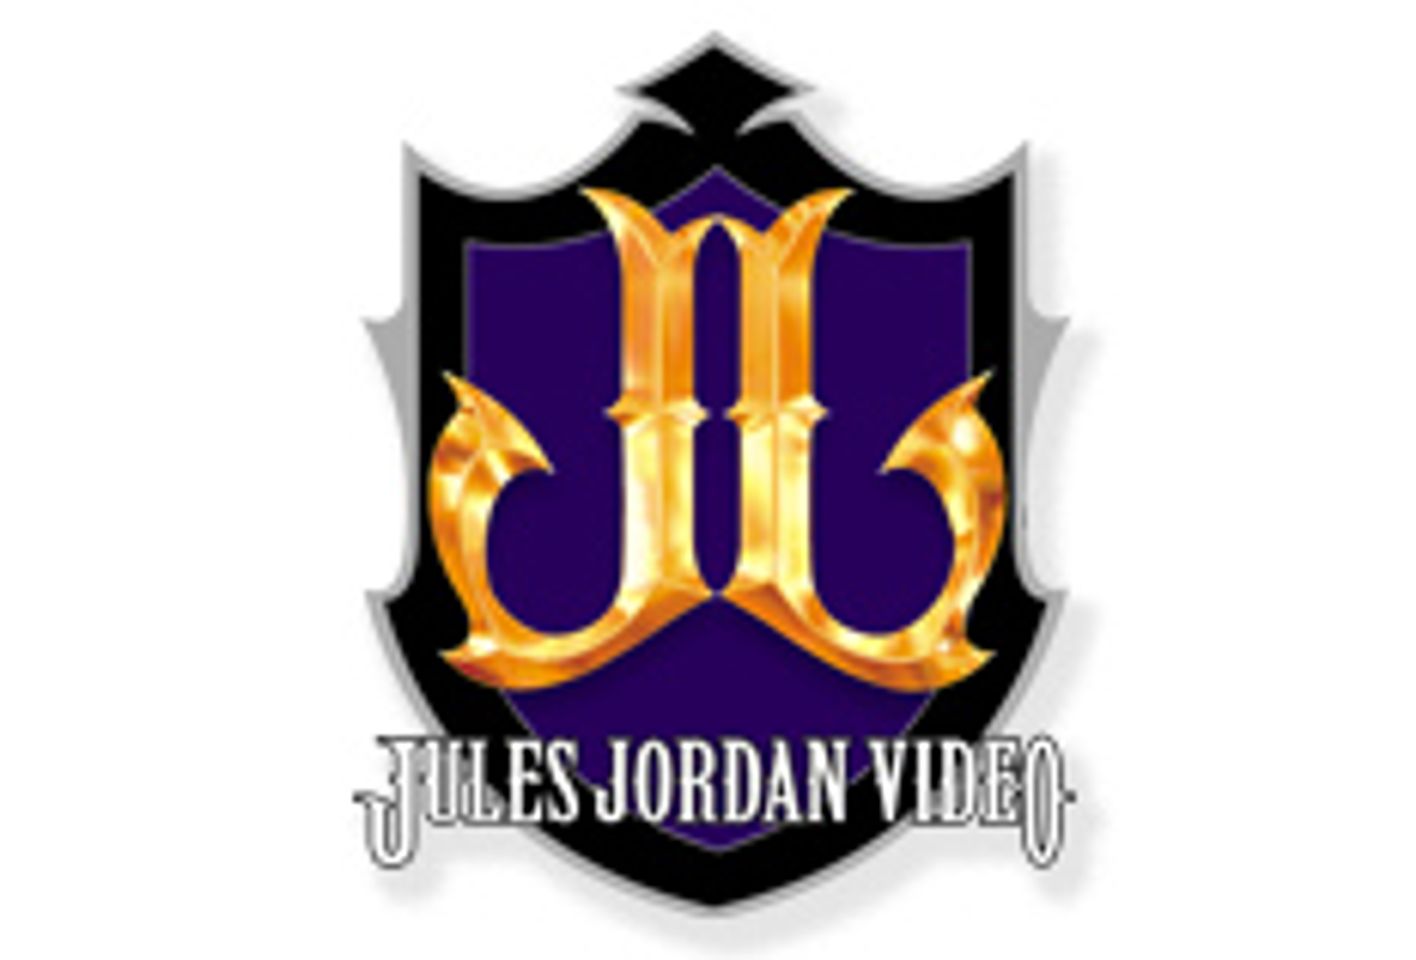 Jules Jordan Video, Affiliated Producers Rack Up 111 Award Noms